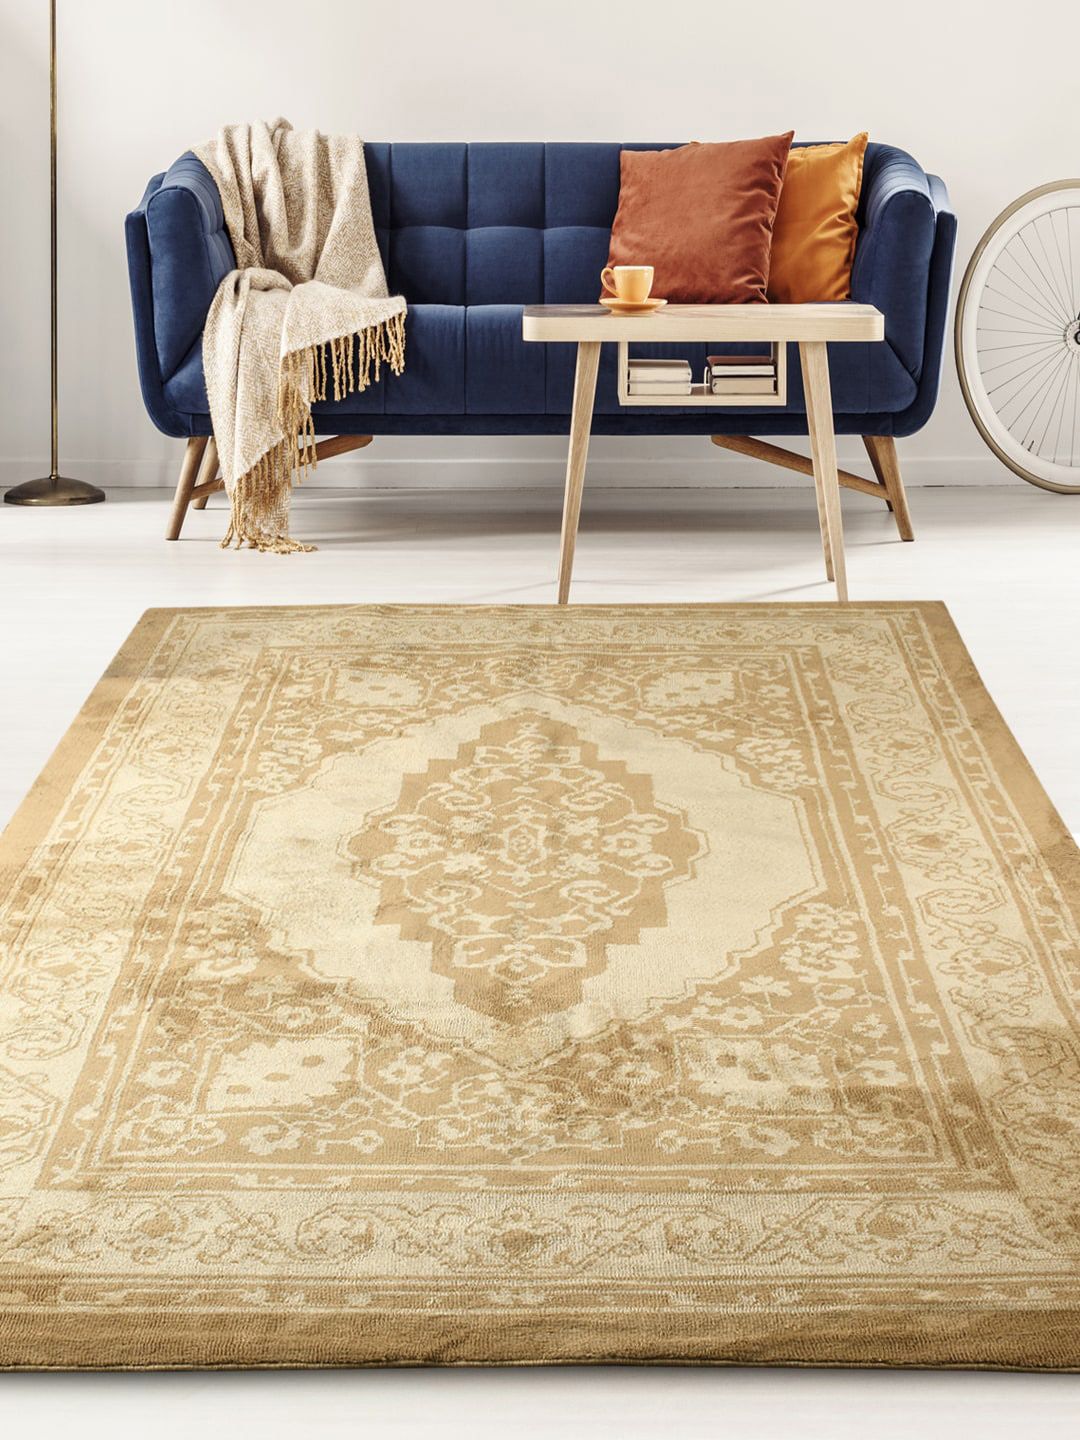 Saral Home Beige & Brown Printed Cotton Rectangular Carpet Price in India